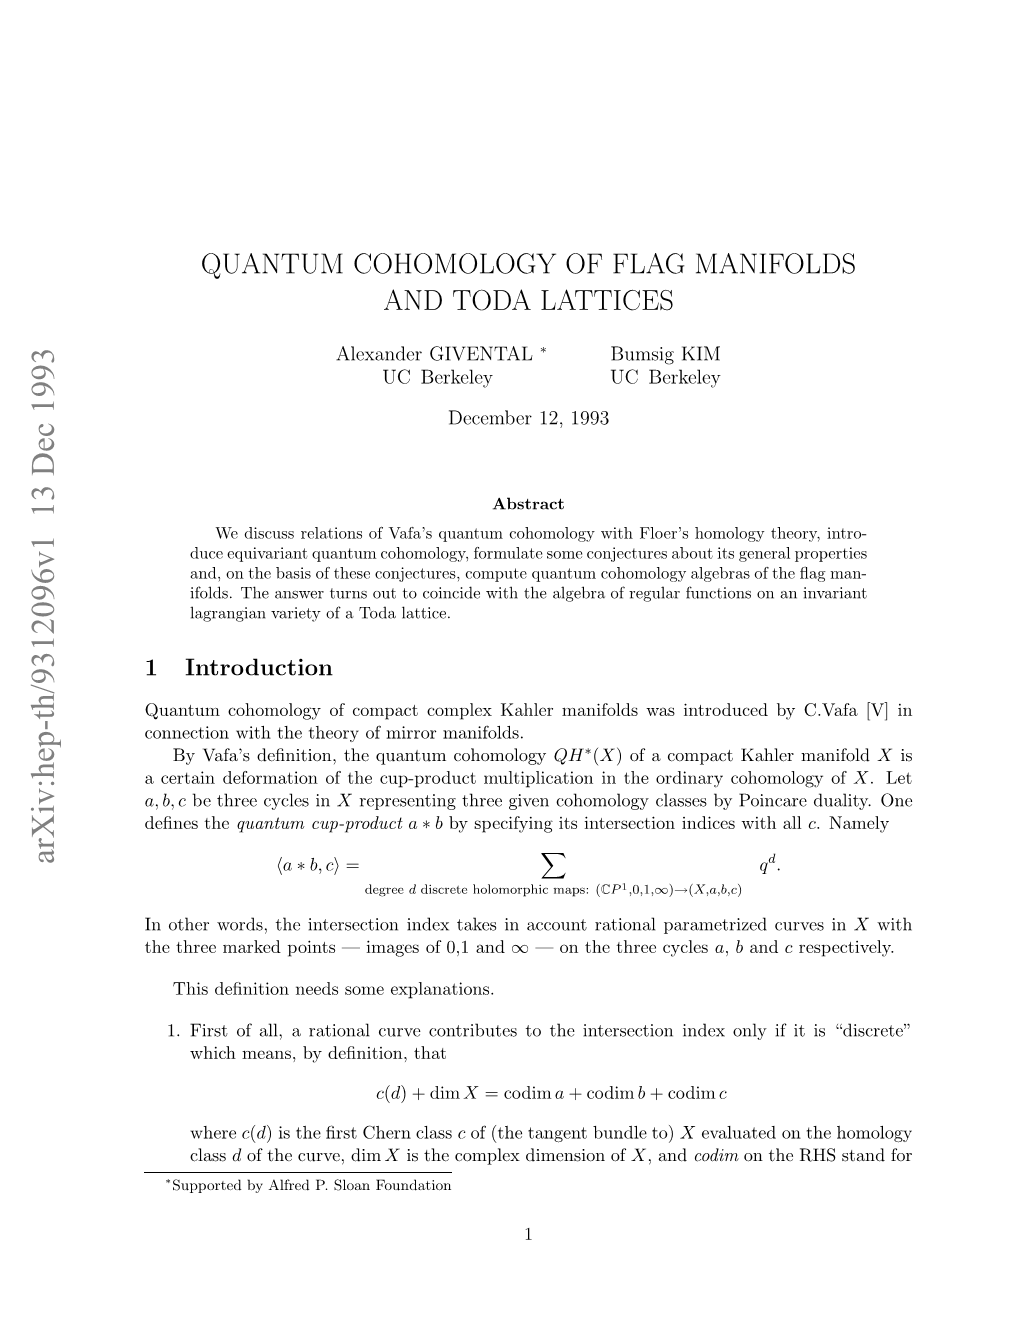 Quantum Cohomology of Flag Manifolds and Toda Lattices